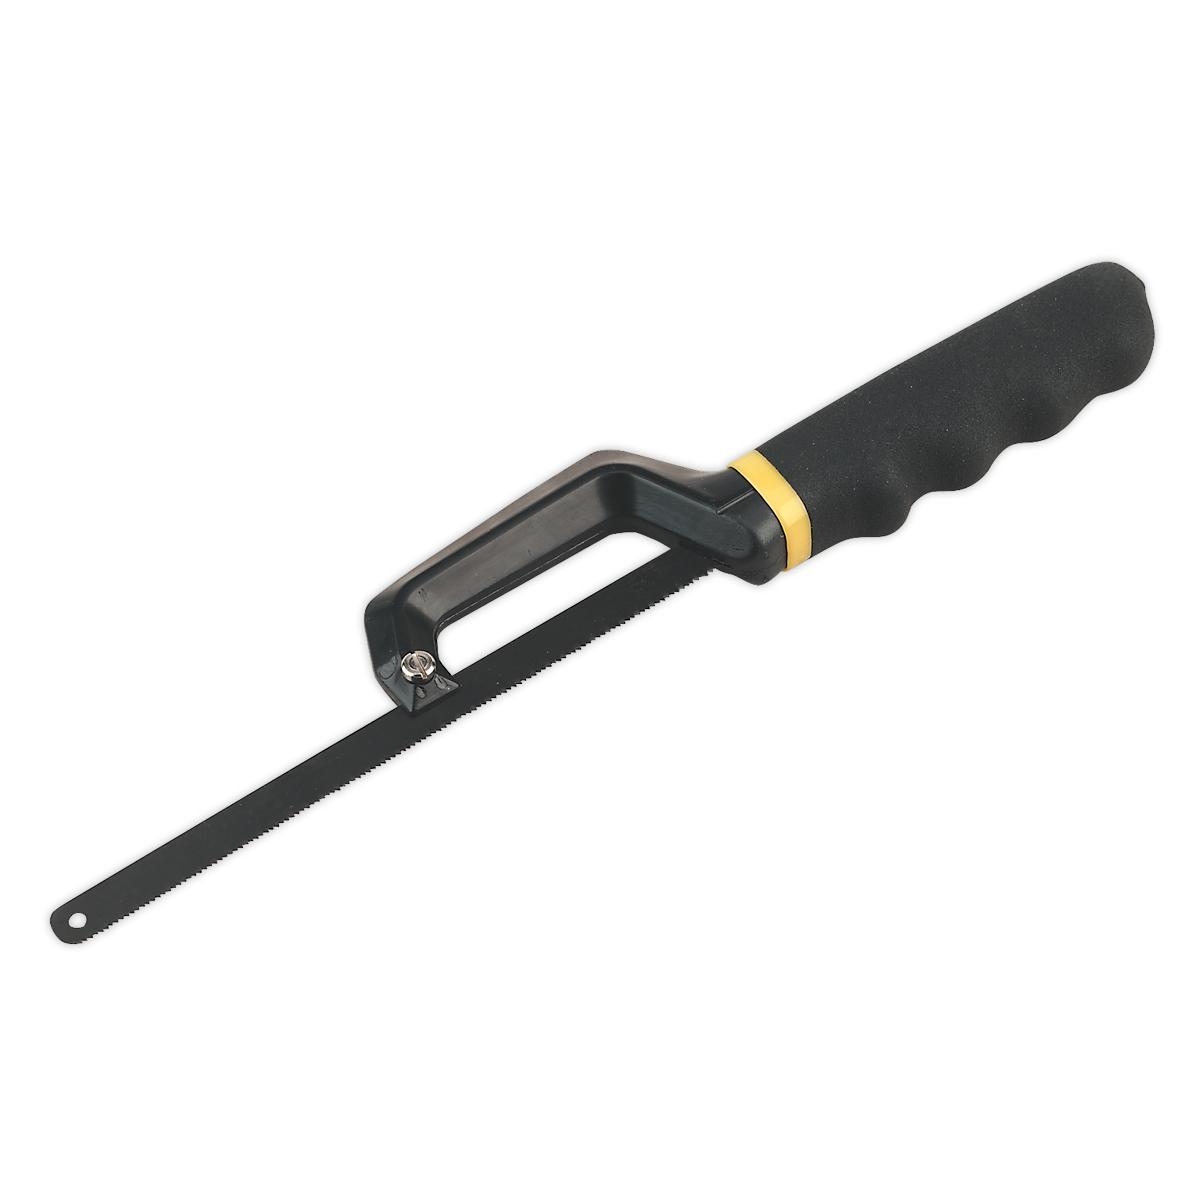 Sealey Mini Hacksaw with Bi-Metal Blade